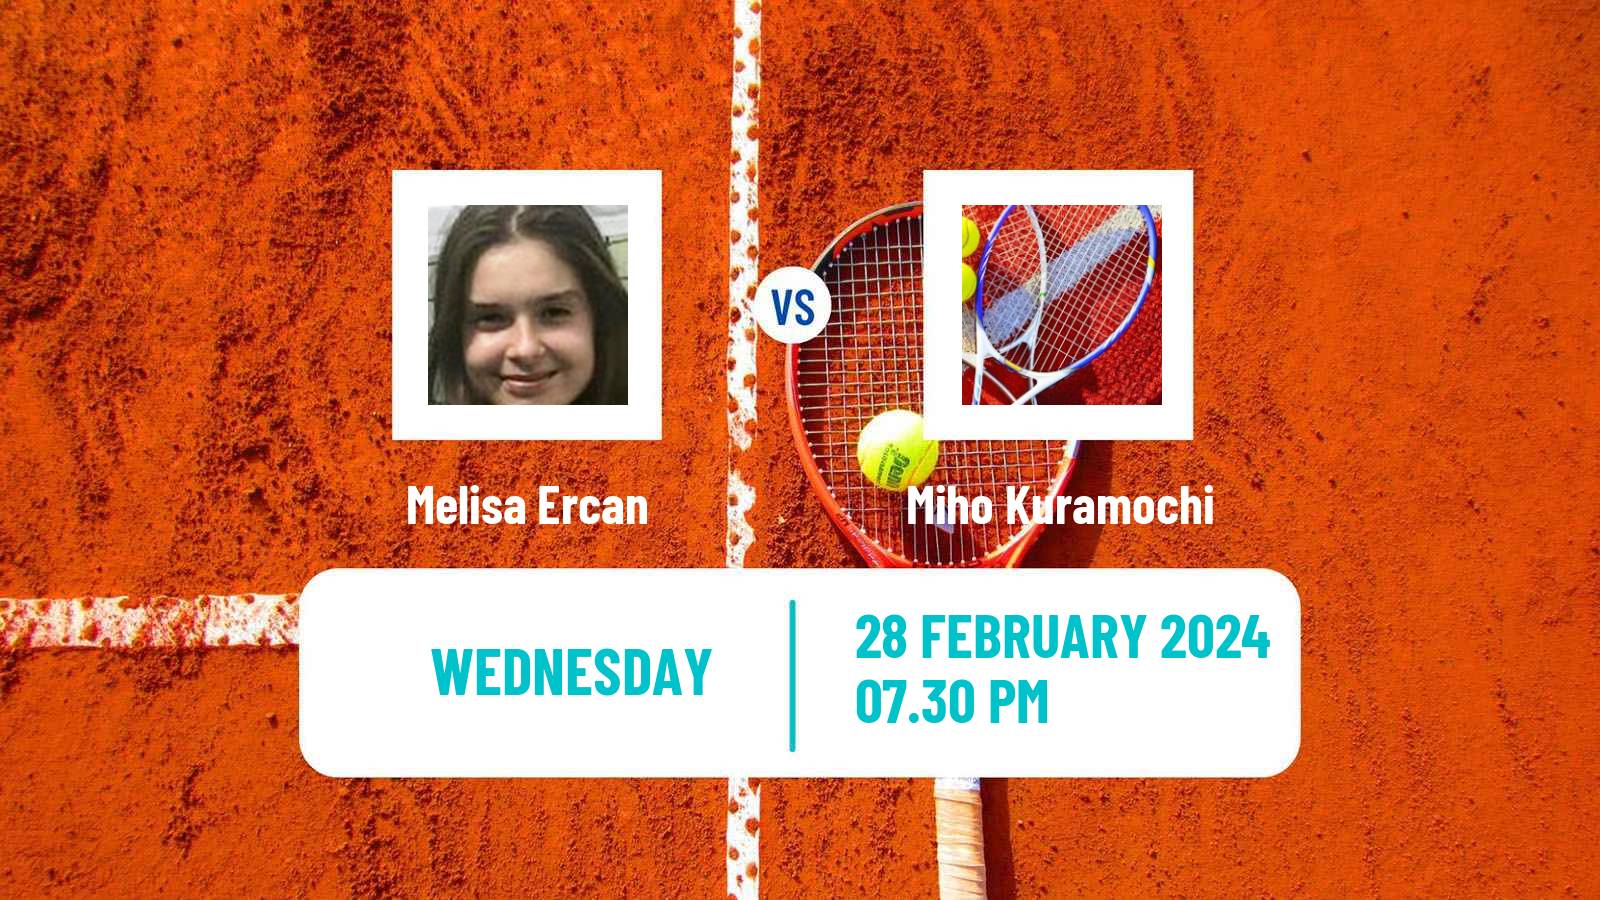 Tennis ITF W35 Traralgon 2 Women Melisa Ercan - Miho Kuramochi